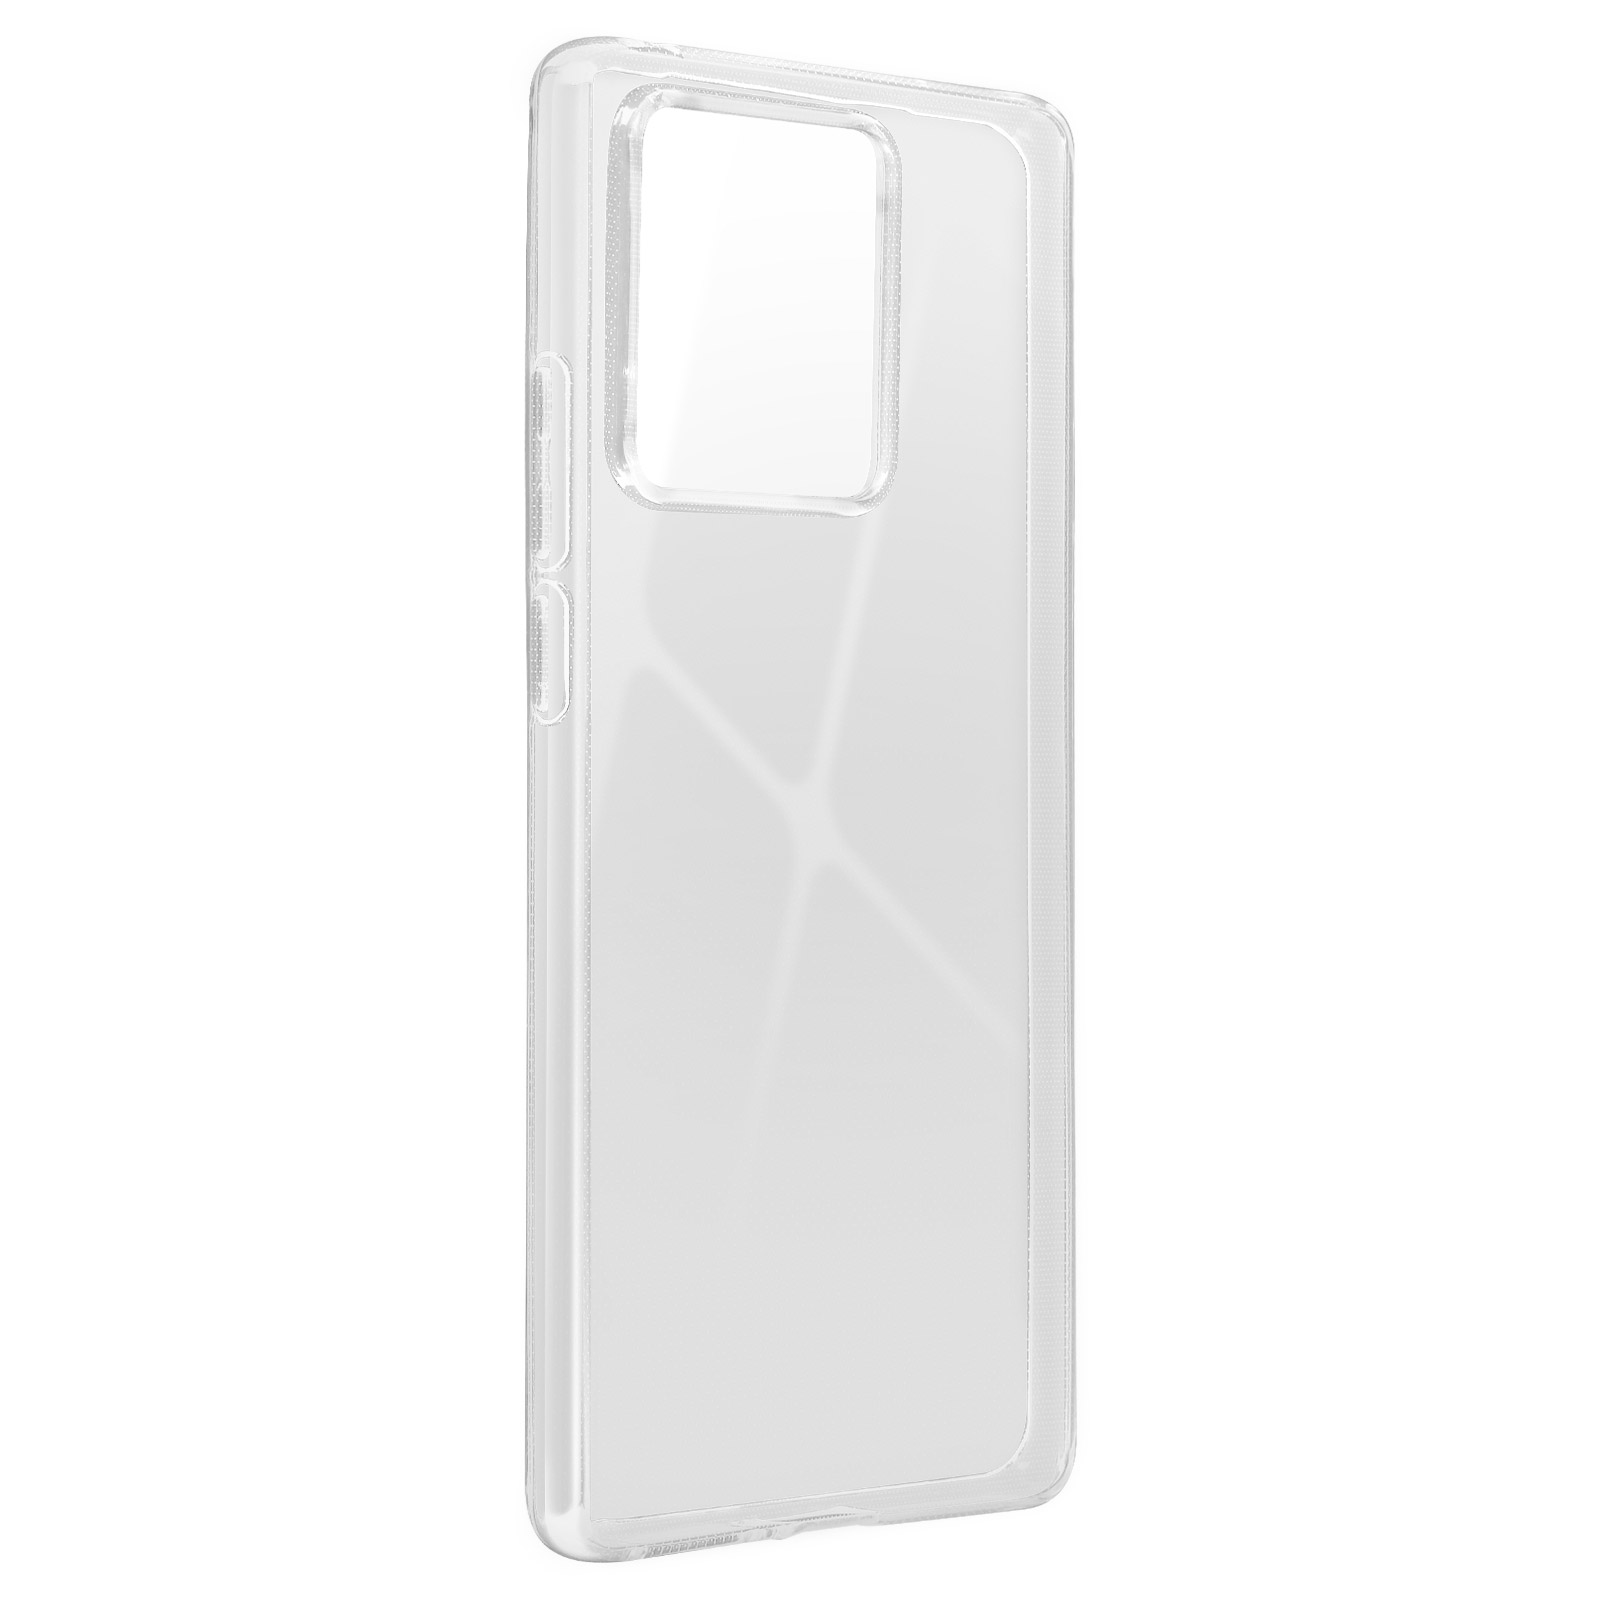 AVIZAR Pureflex Edge Motorola, Transparent Series, Backcover, Series 40,